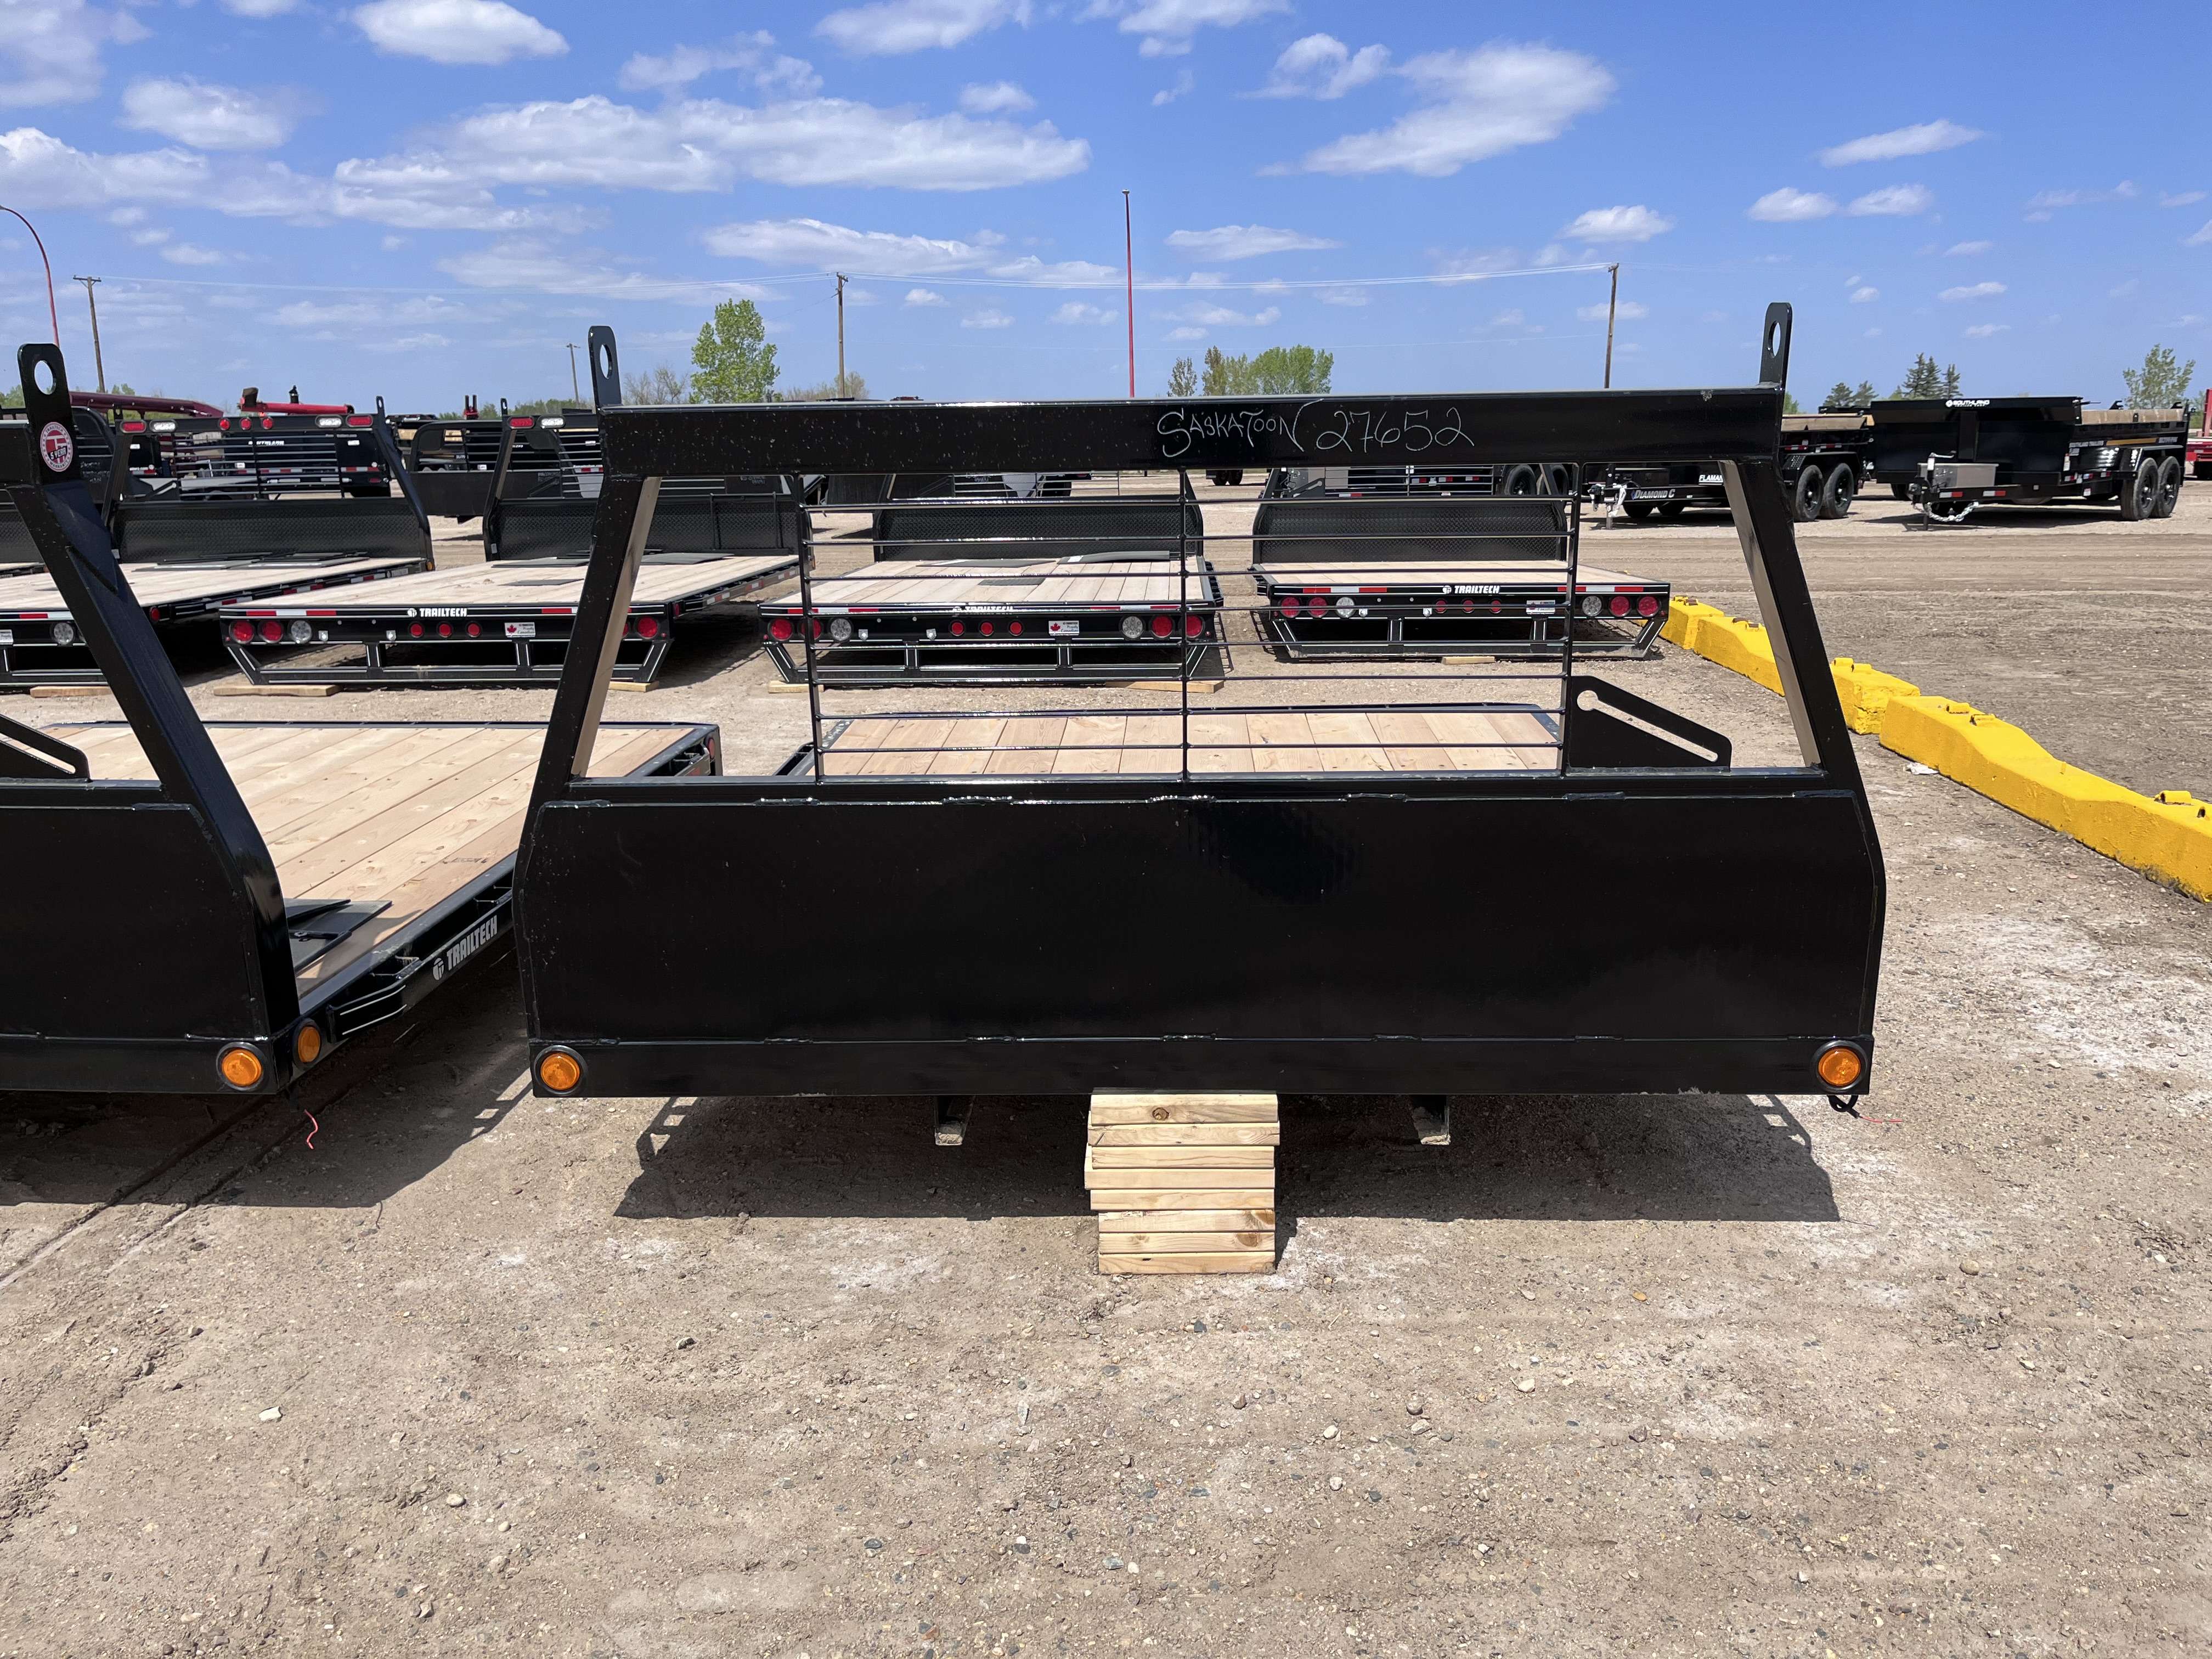 Trailtech ML Series Truck Deck - 8 in stock